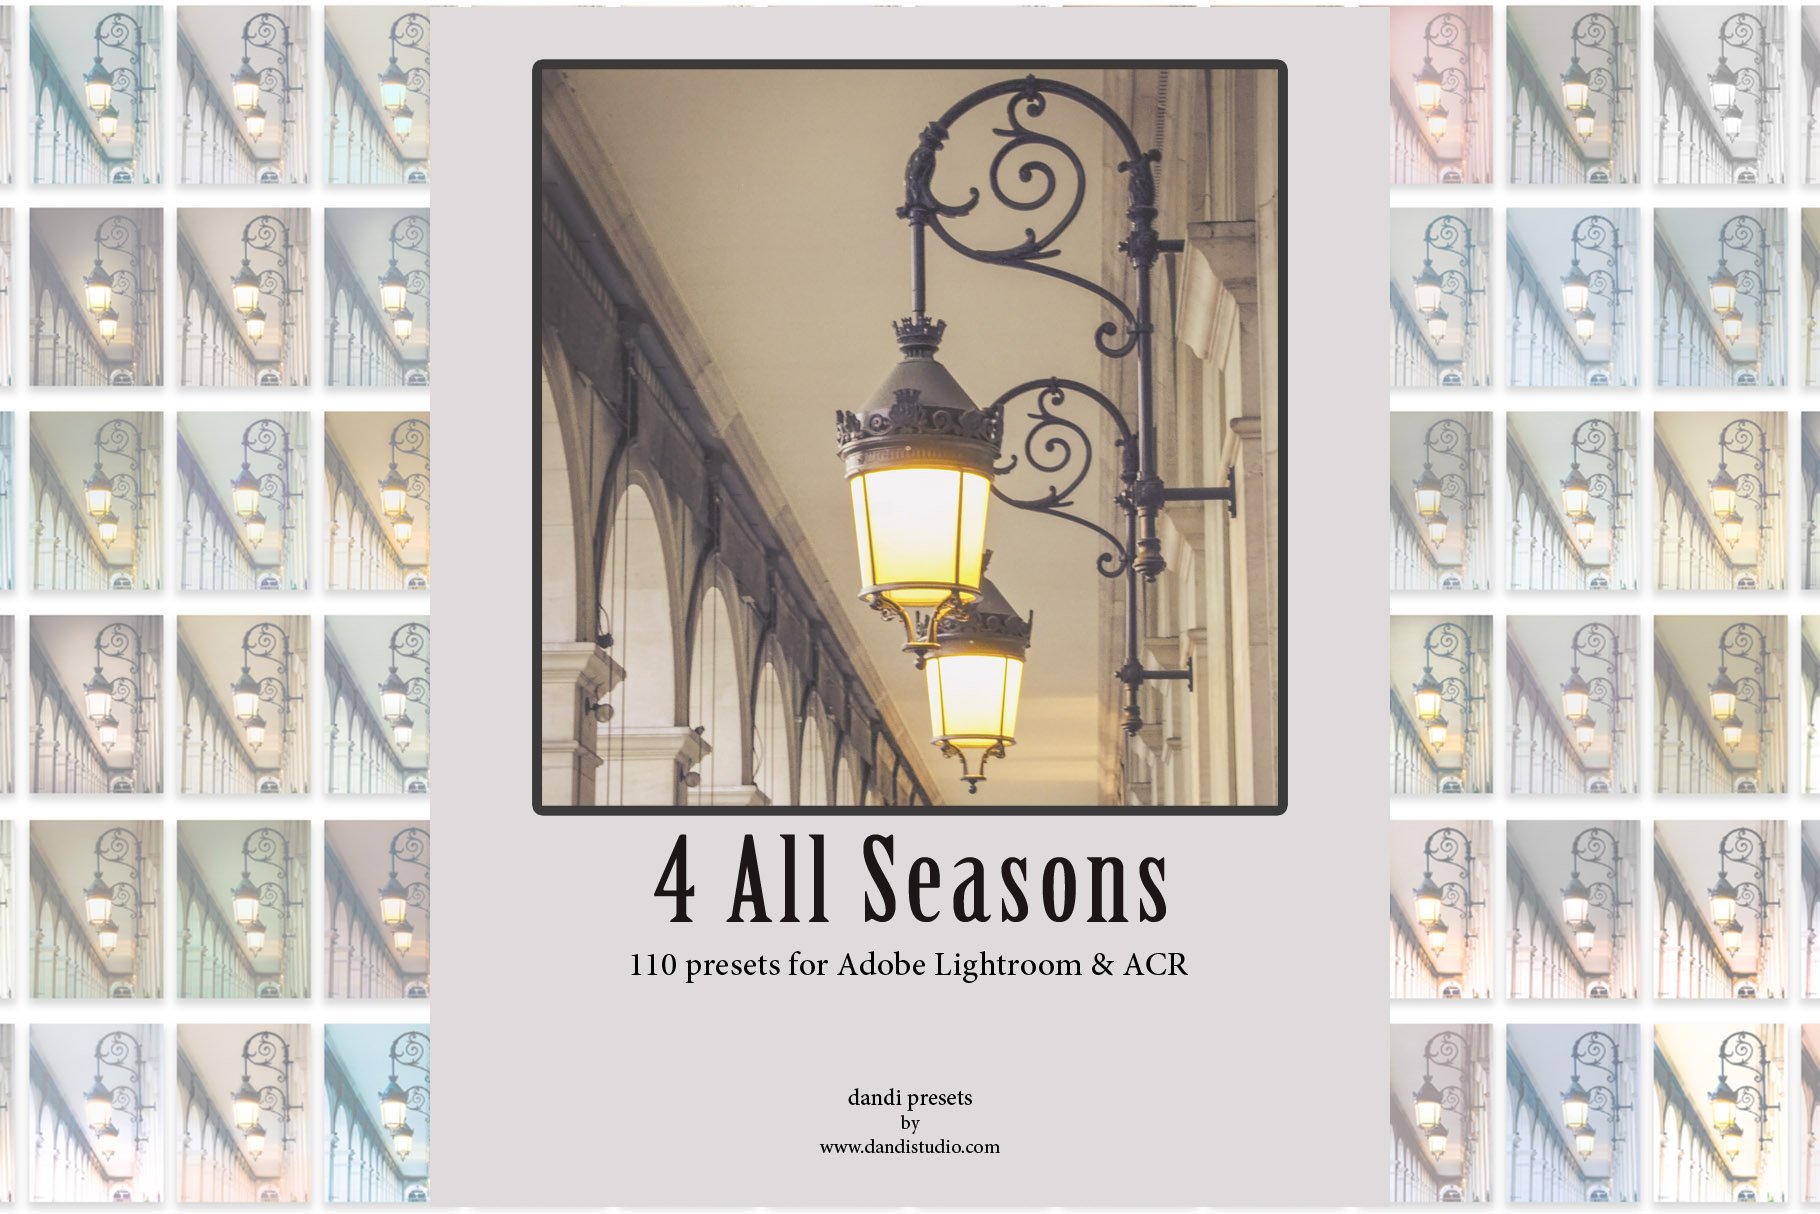 4 All Seasons Adobe presetscover image.